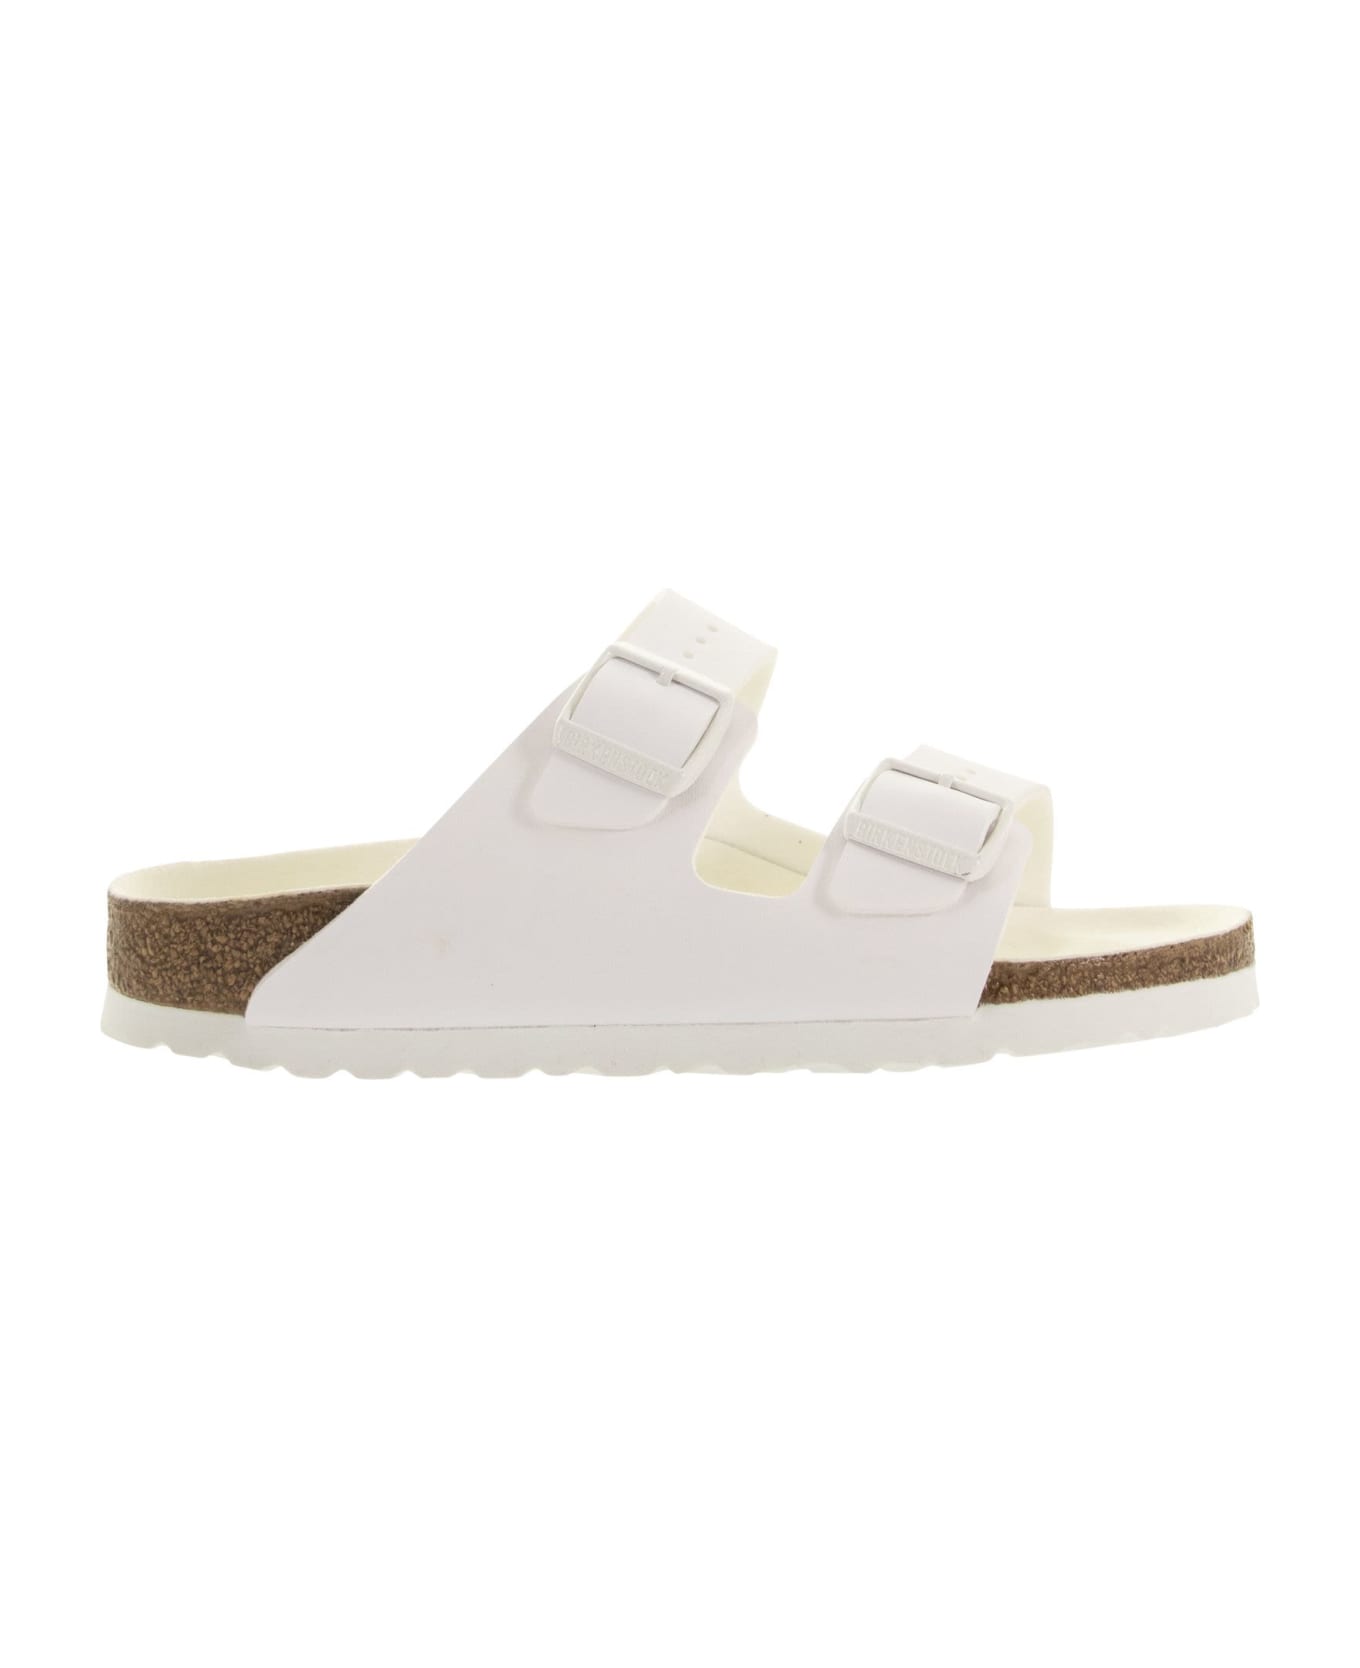 Birkenstock Arizona - Slipper Sandal - Triples white